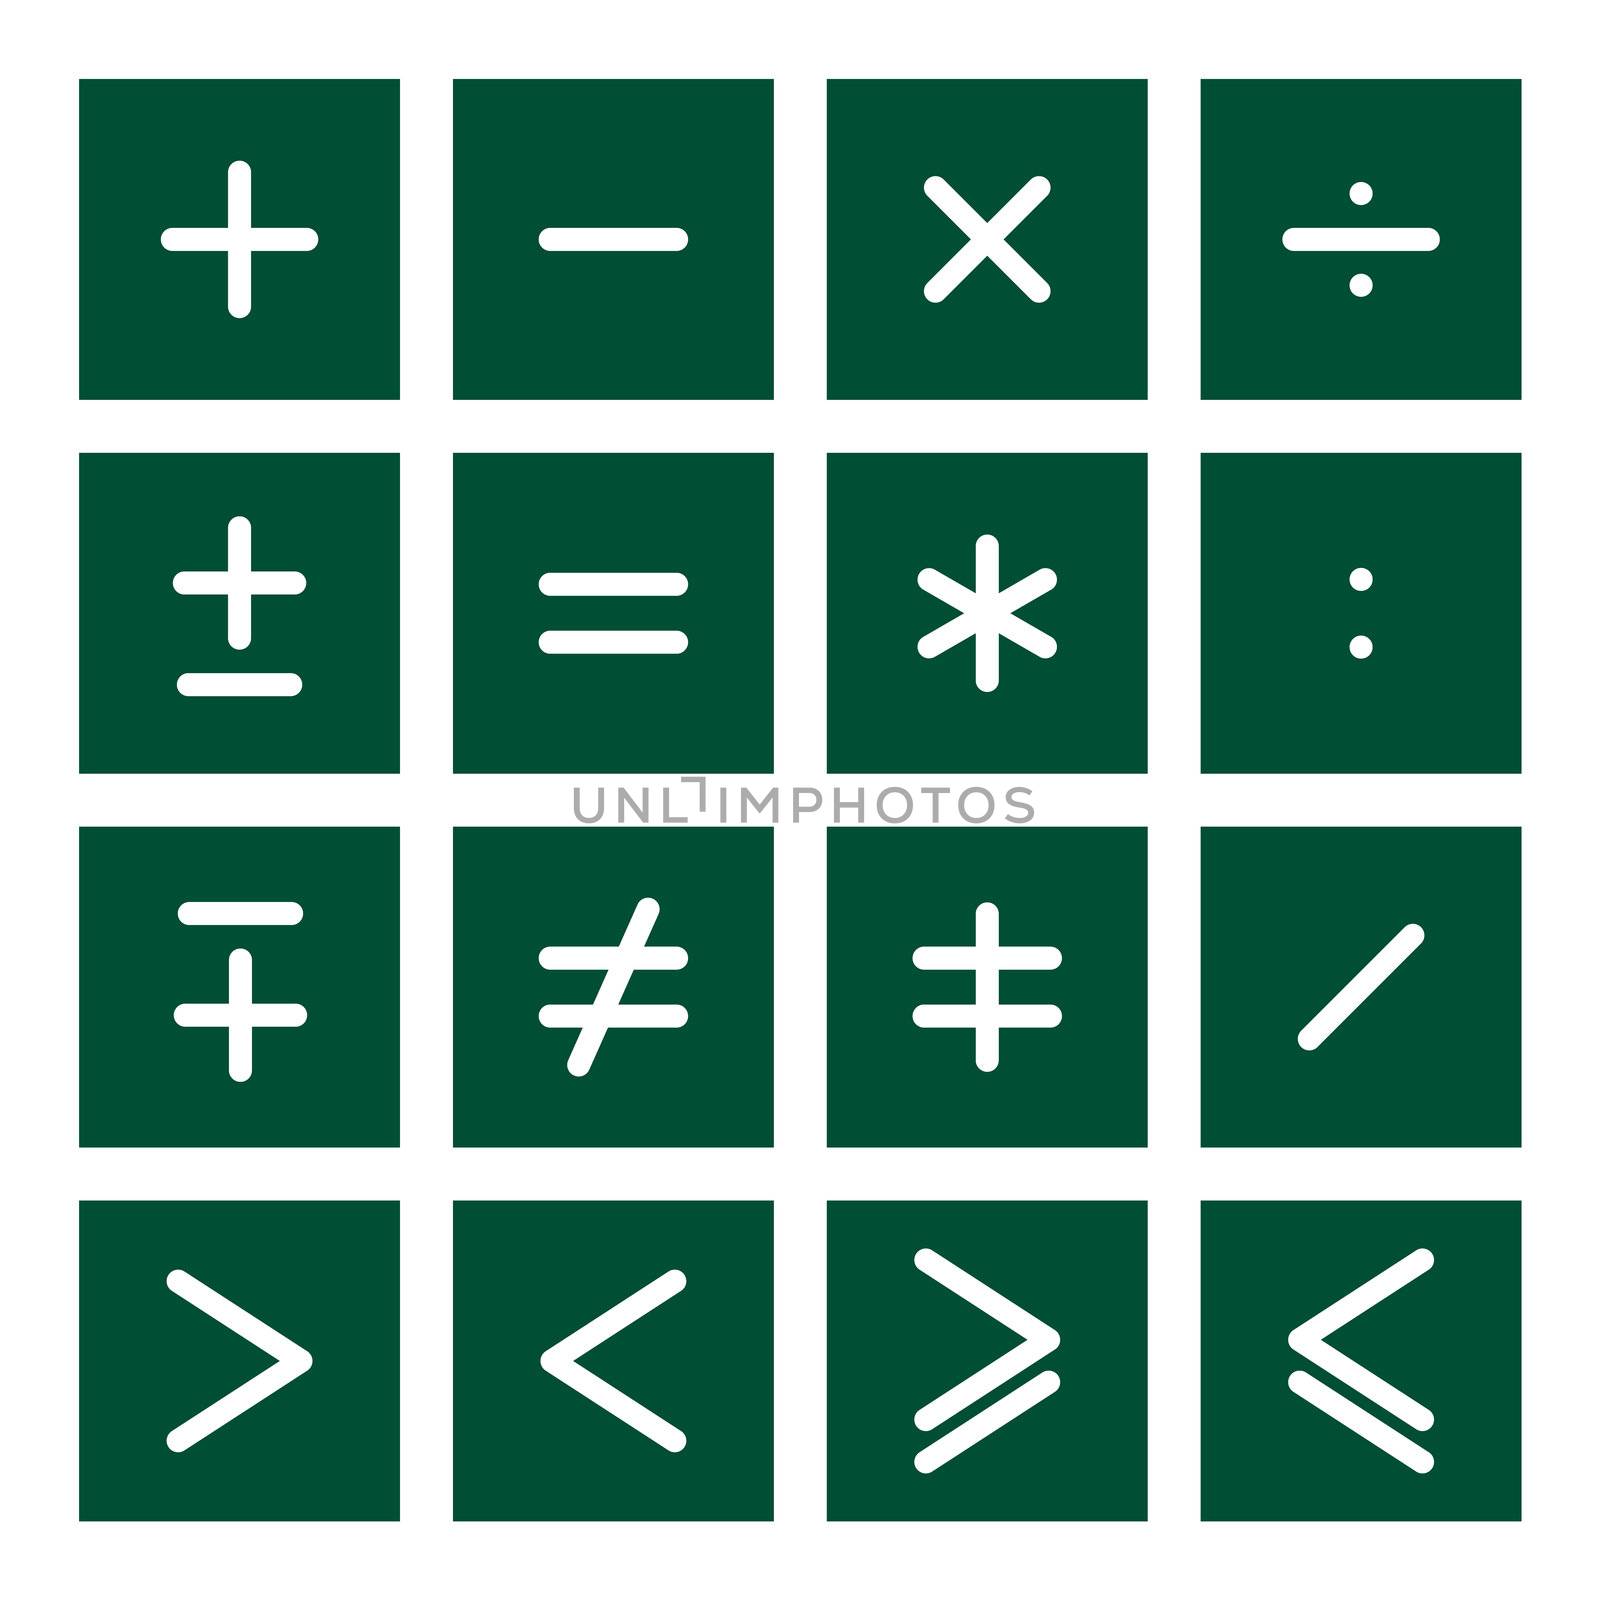 16 icon set of mathematical operations symbols